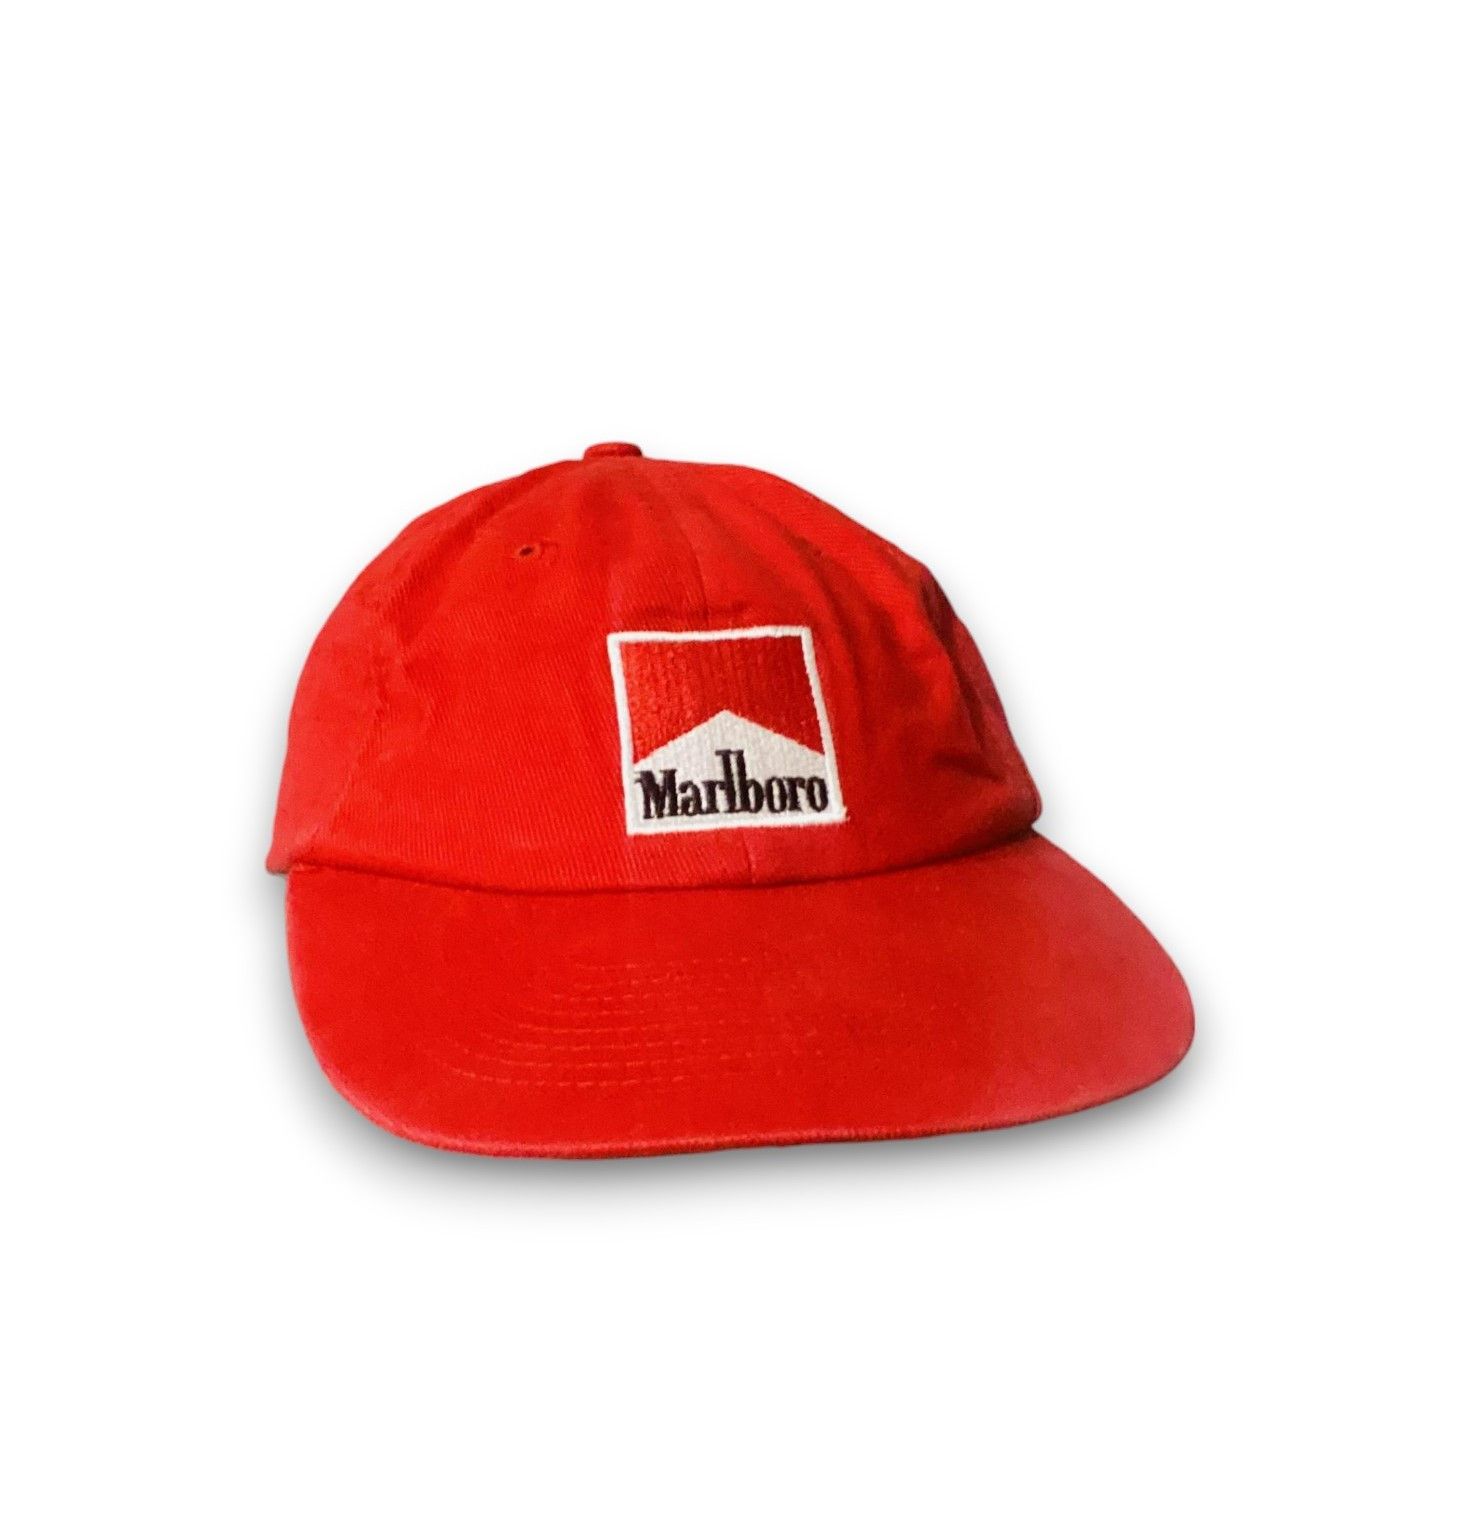 Marlboro Vintage Cap Snapback Red 90s Y2K Hat - 1